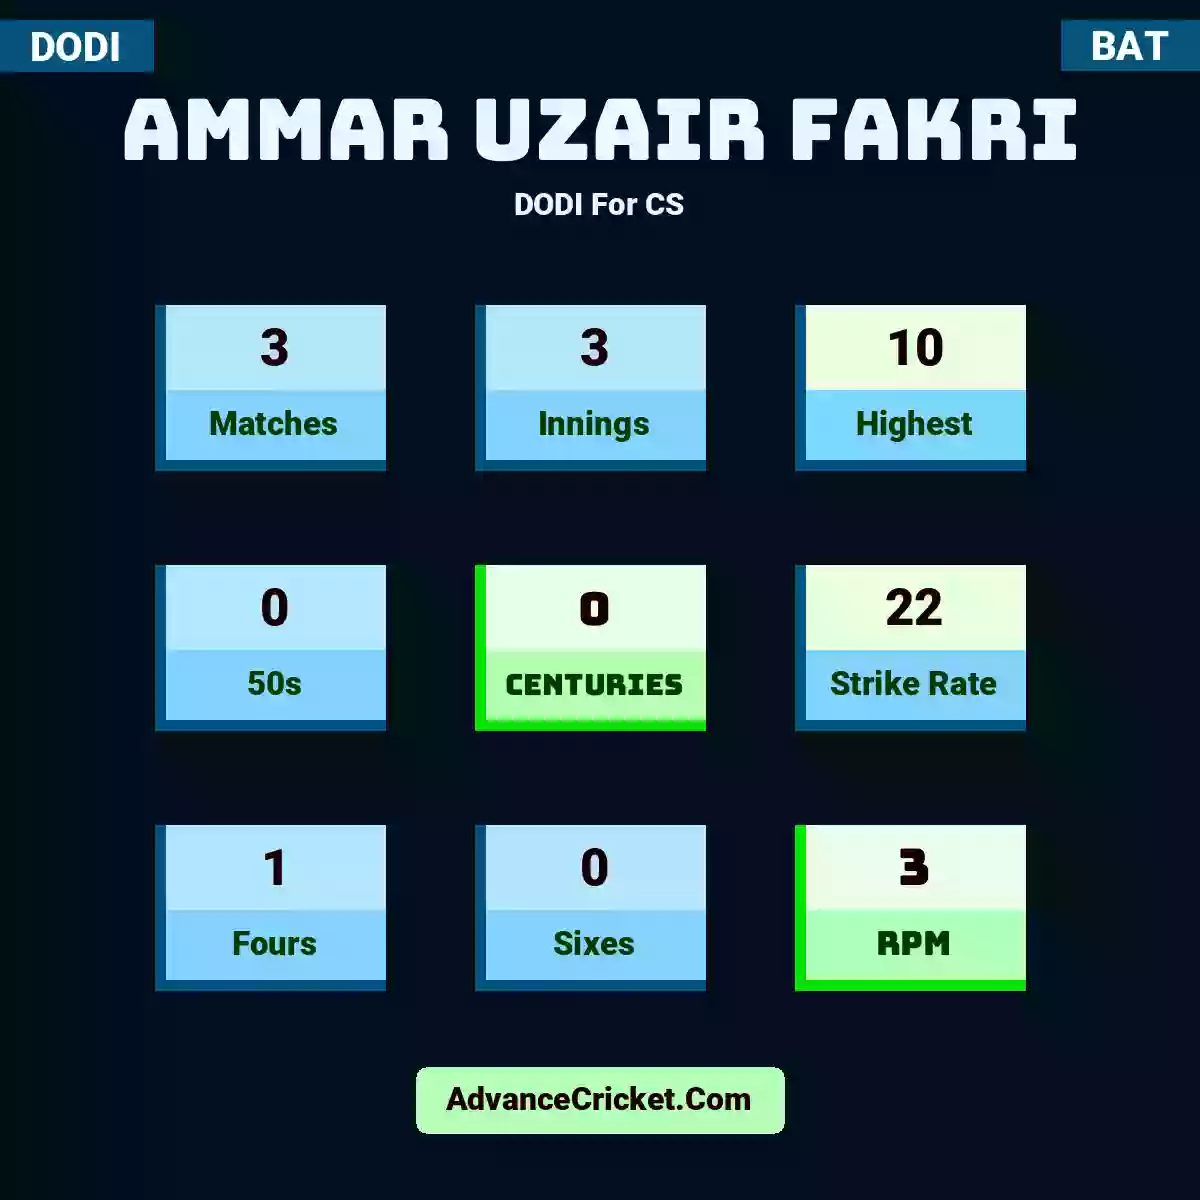 Ammar Uzair Fakri DODI  For CS, Ammar Uzair Fakri played 3 matches, scored 10 runs as highest, 0 half-centuries, and 0 centuries, with a strike rate of 22. A.Uzair.Fakri hit 1 fours and 0 sixes, with an RPM of 3.